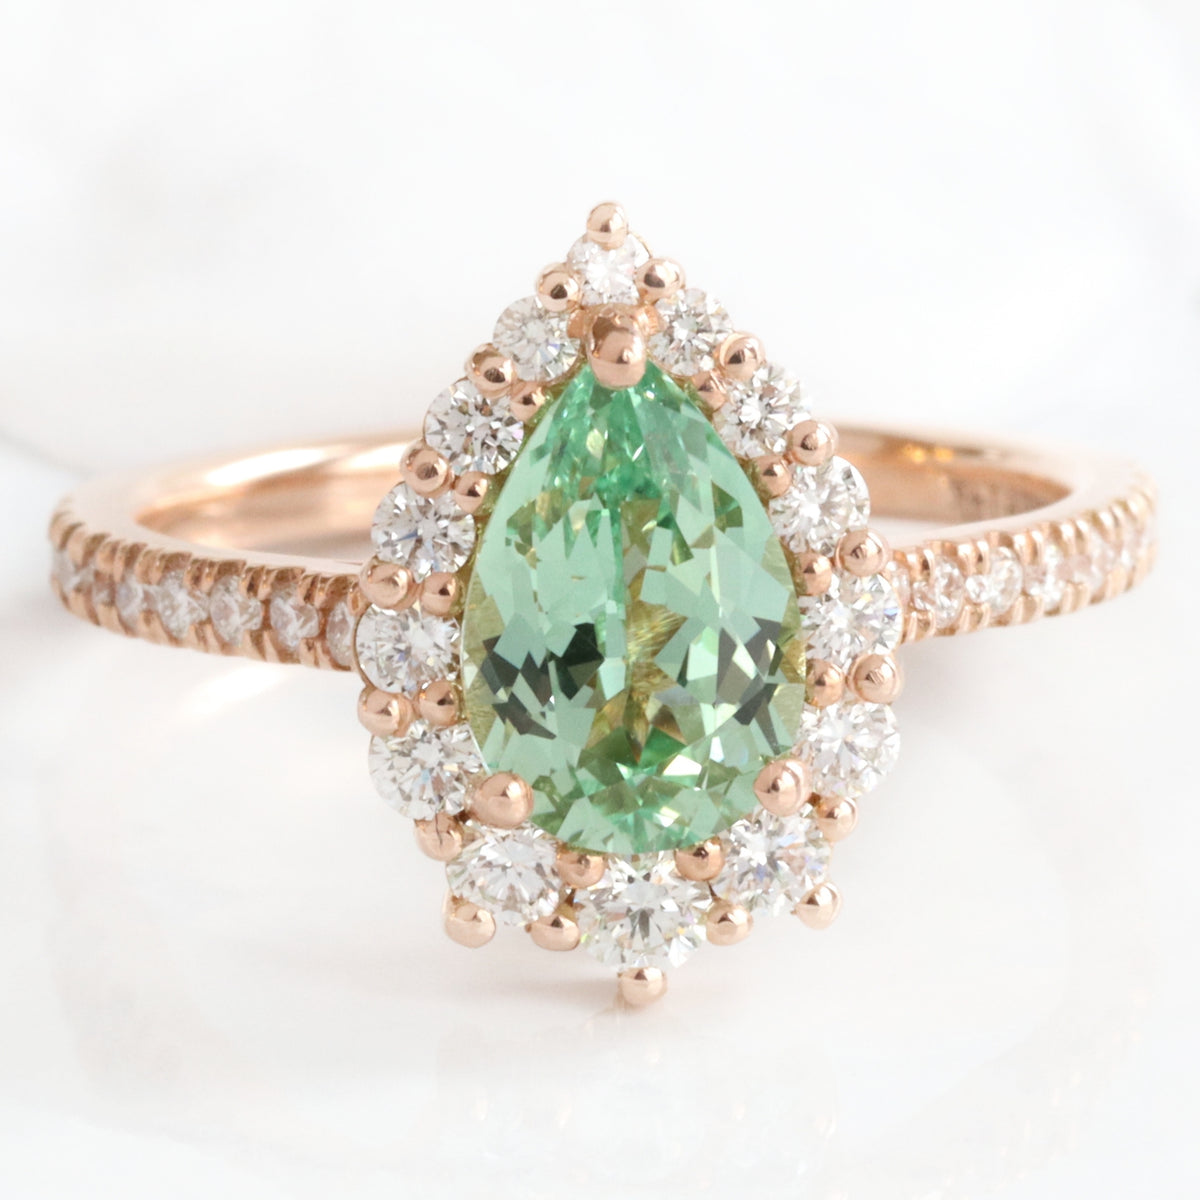 Pear seafoam green sapphire engagement ring rose gold halo diamond sapphire ring la more design jewelry